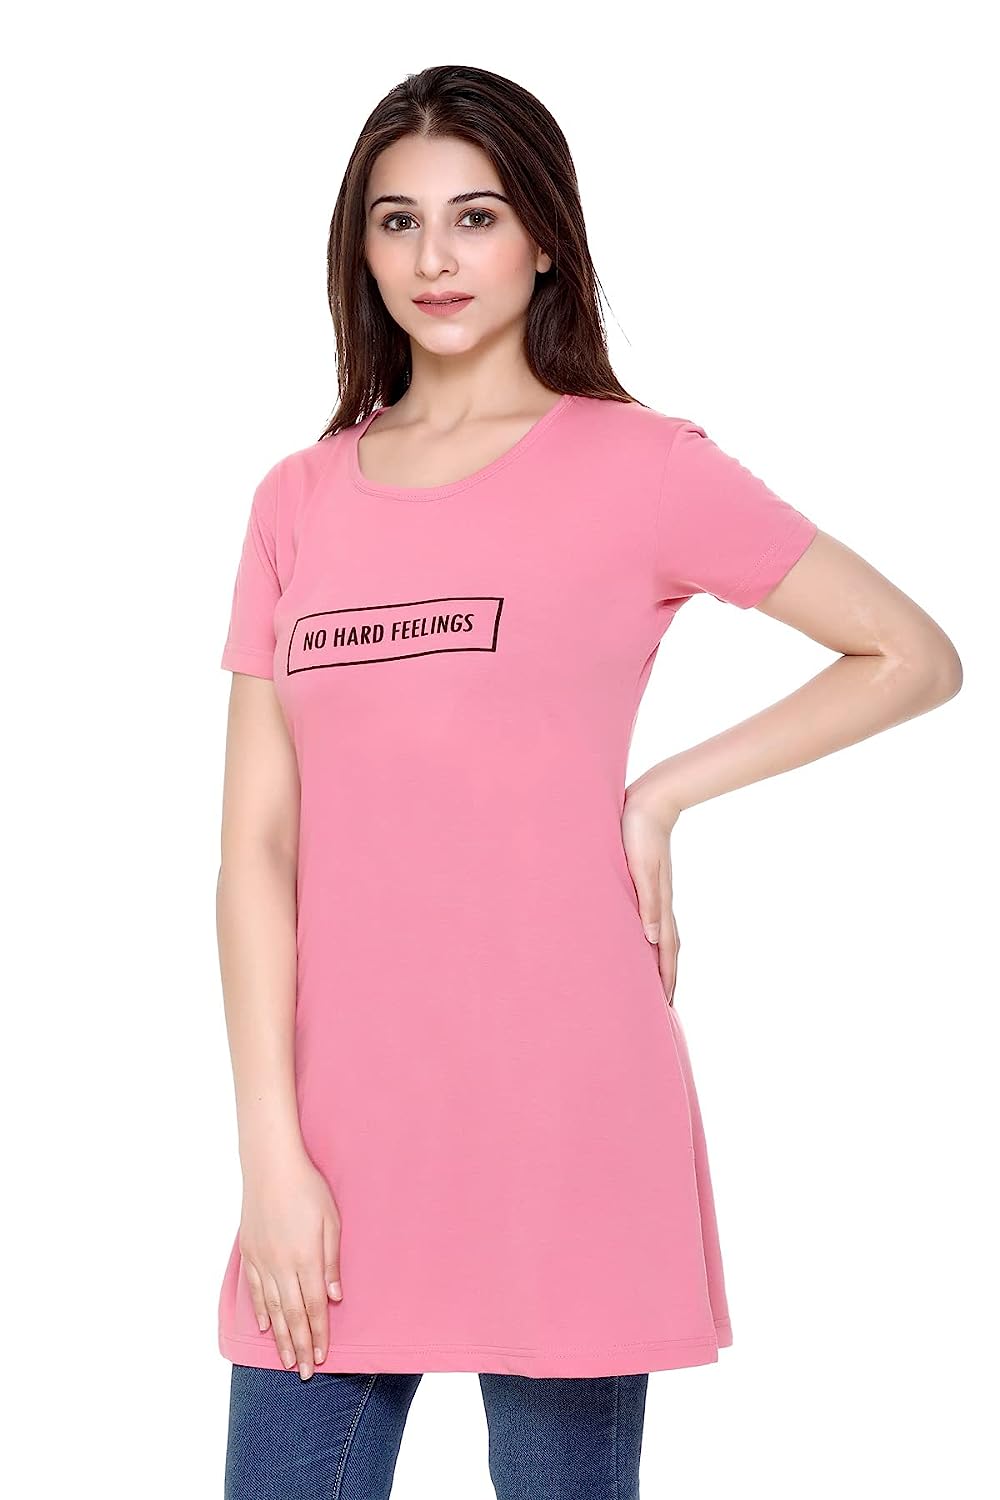 Plush Women's Long Printed Cotton Round Neck Half Sleeve T-Shirt/Tshirts (DPL-PT-001) -  Women's T-Shirts in Sri Lanka from Arcade Online Shopping - Just Rs. 3500!